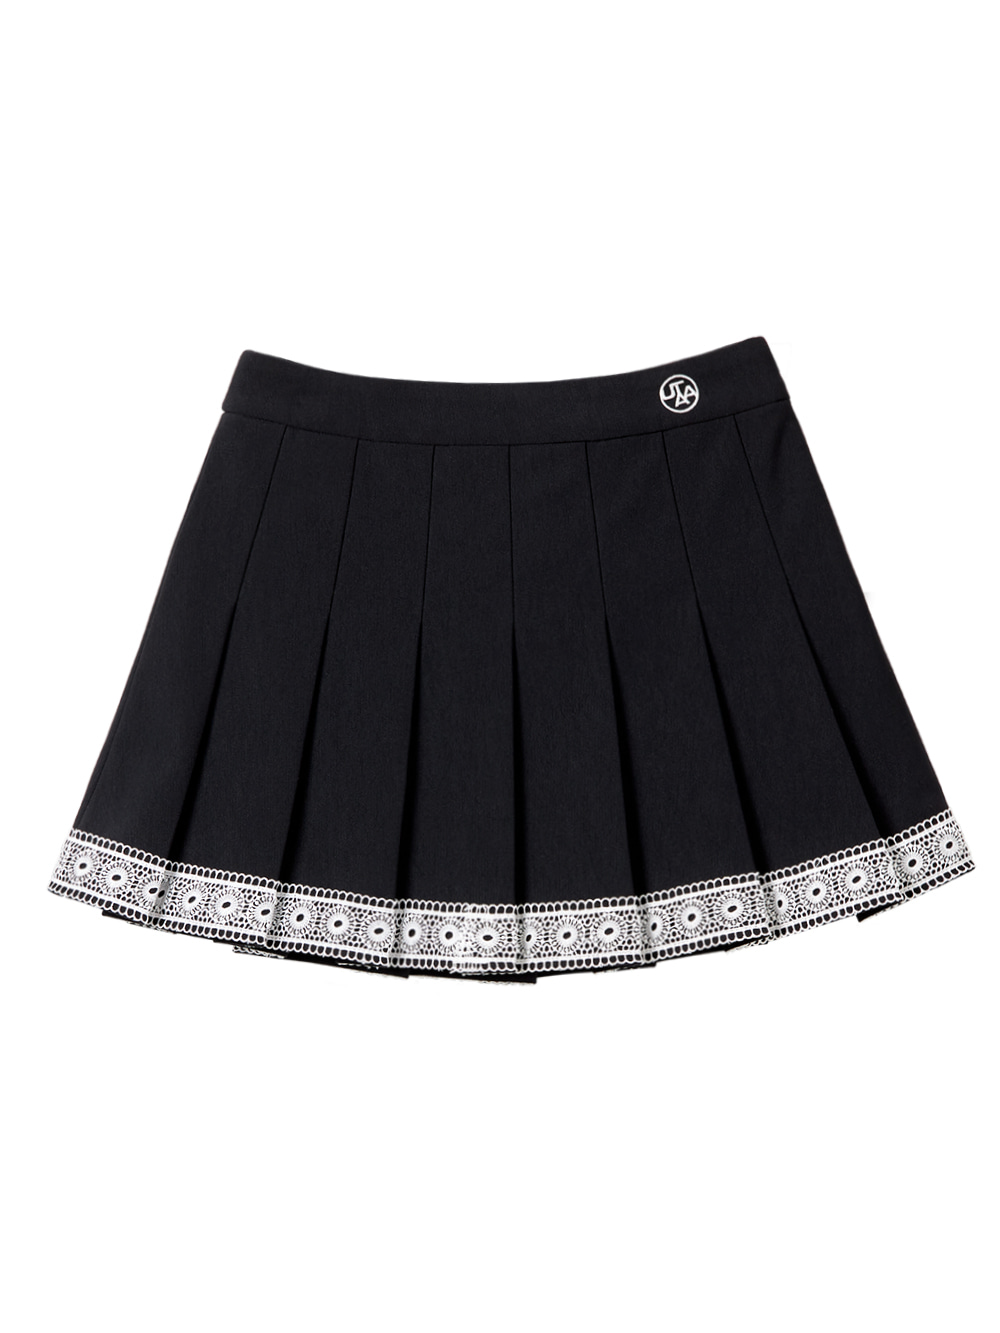 UTAA Notredame Lace Flare Skirt : Black (UB1SKF200BK)